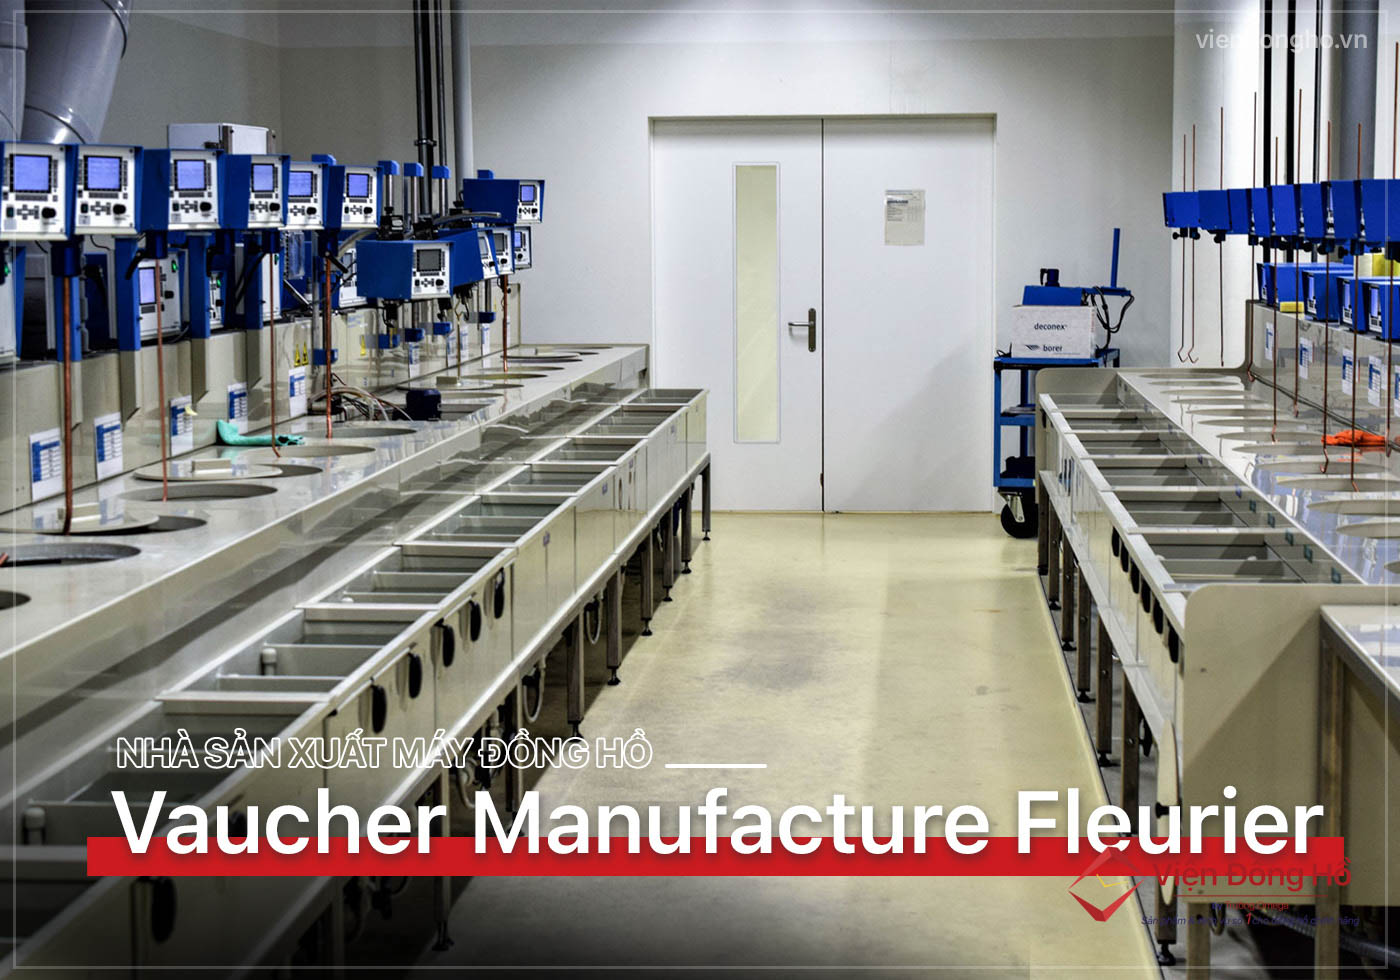 Nha san xuat may dong ho Vaucher Manufacture Fleurier 14